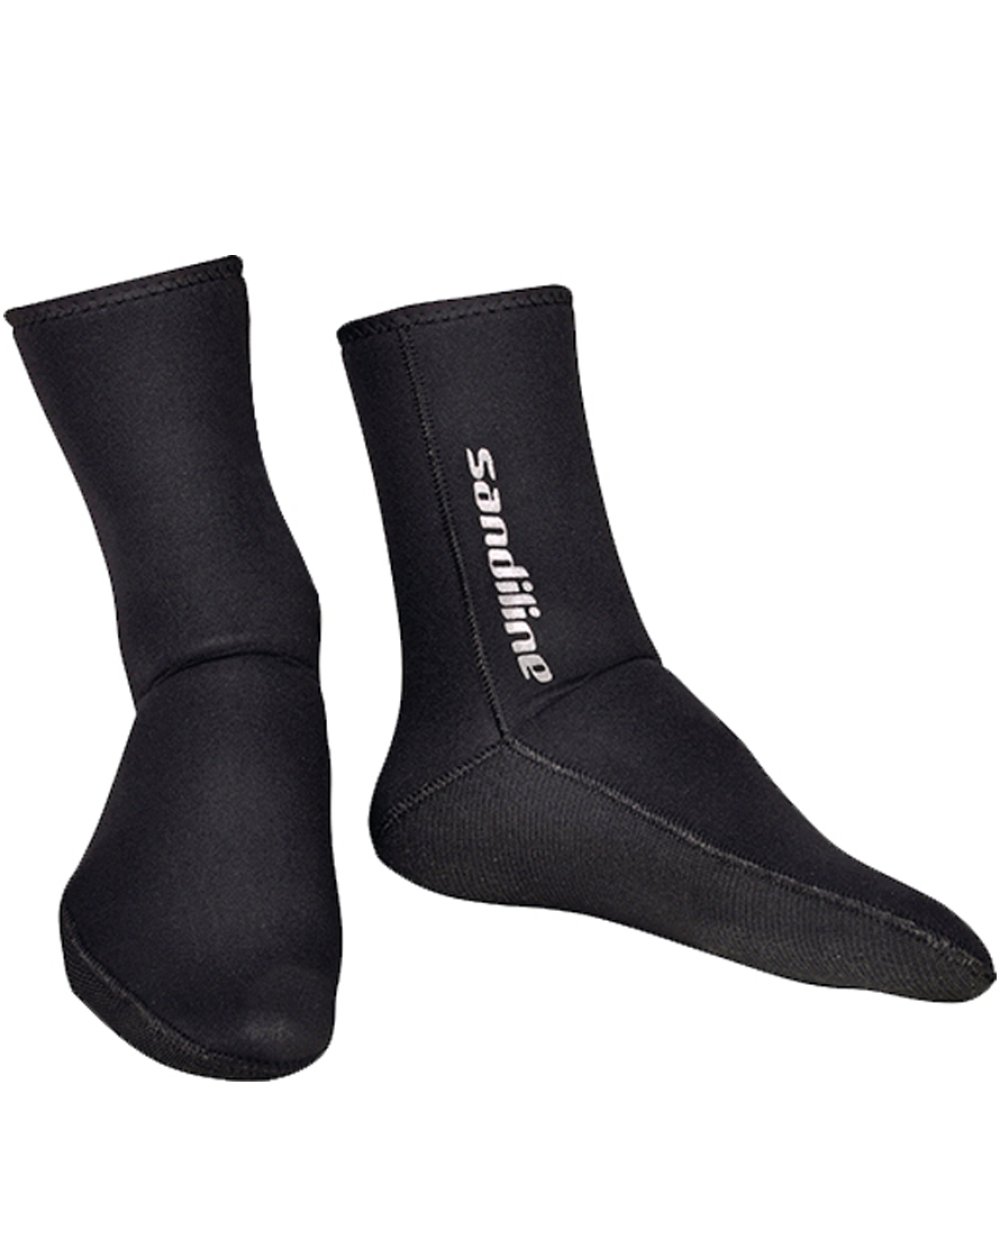 SANDILINE Socks Splash 30 - Gr. 36/37